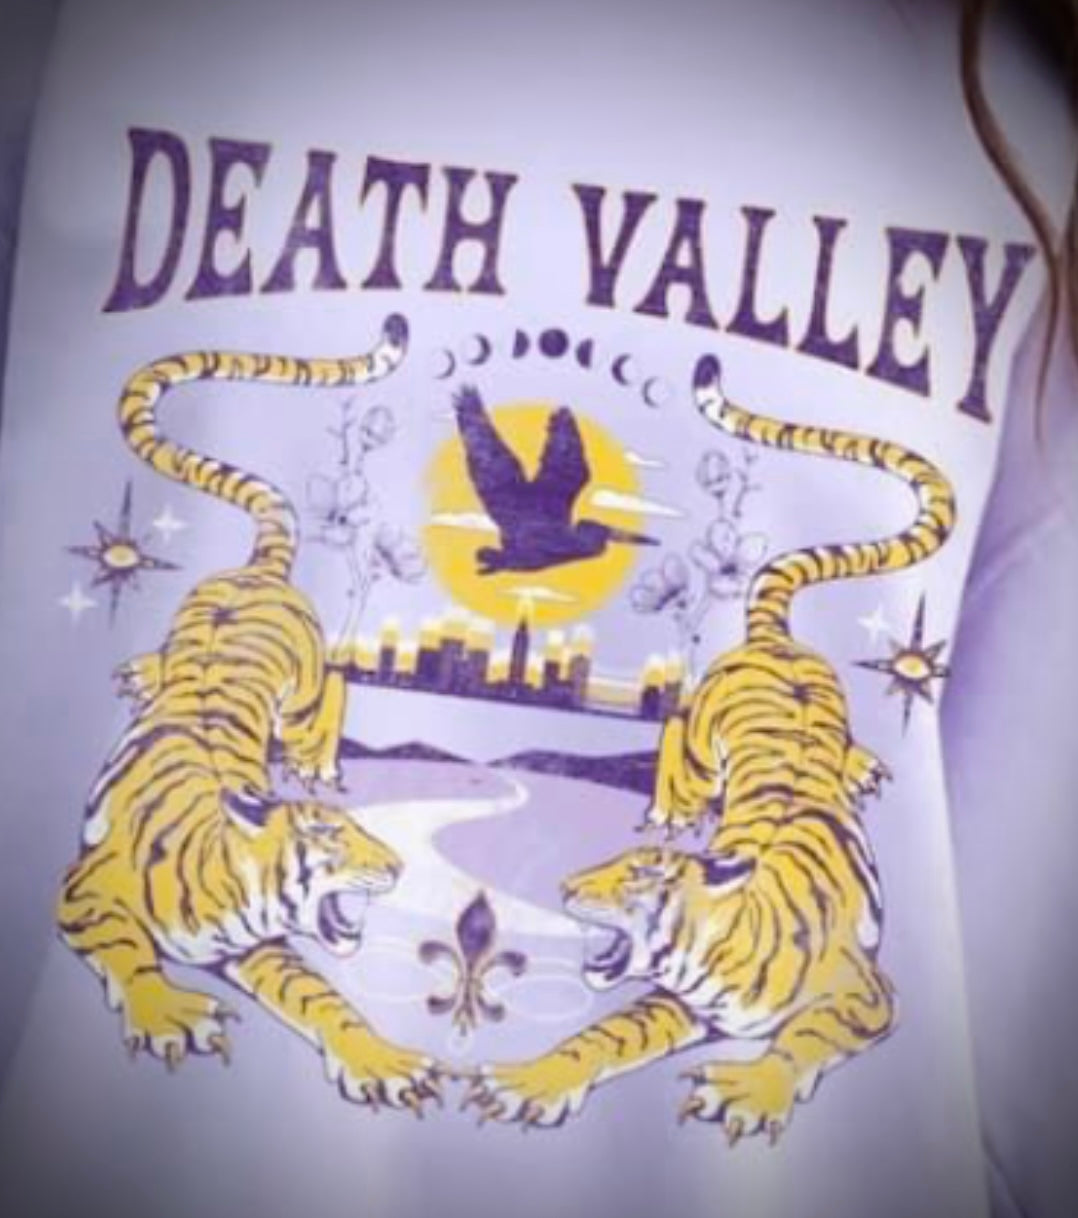 Death Valley Sweatshirt